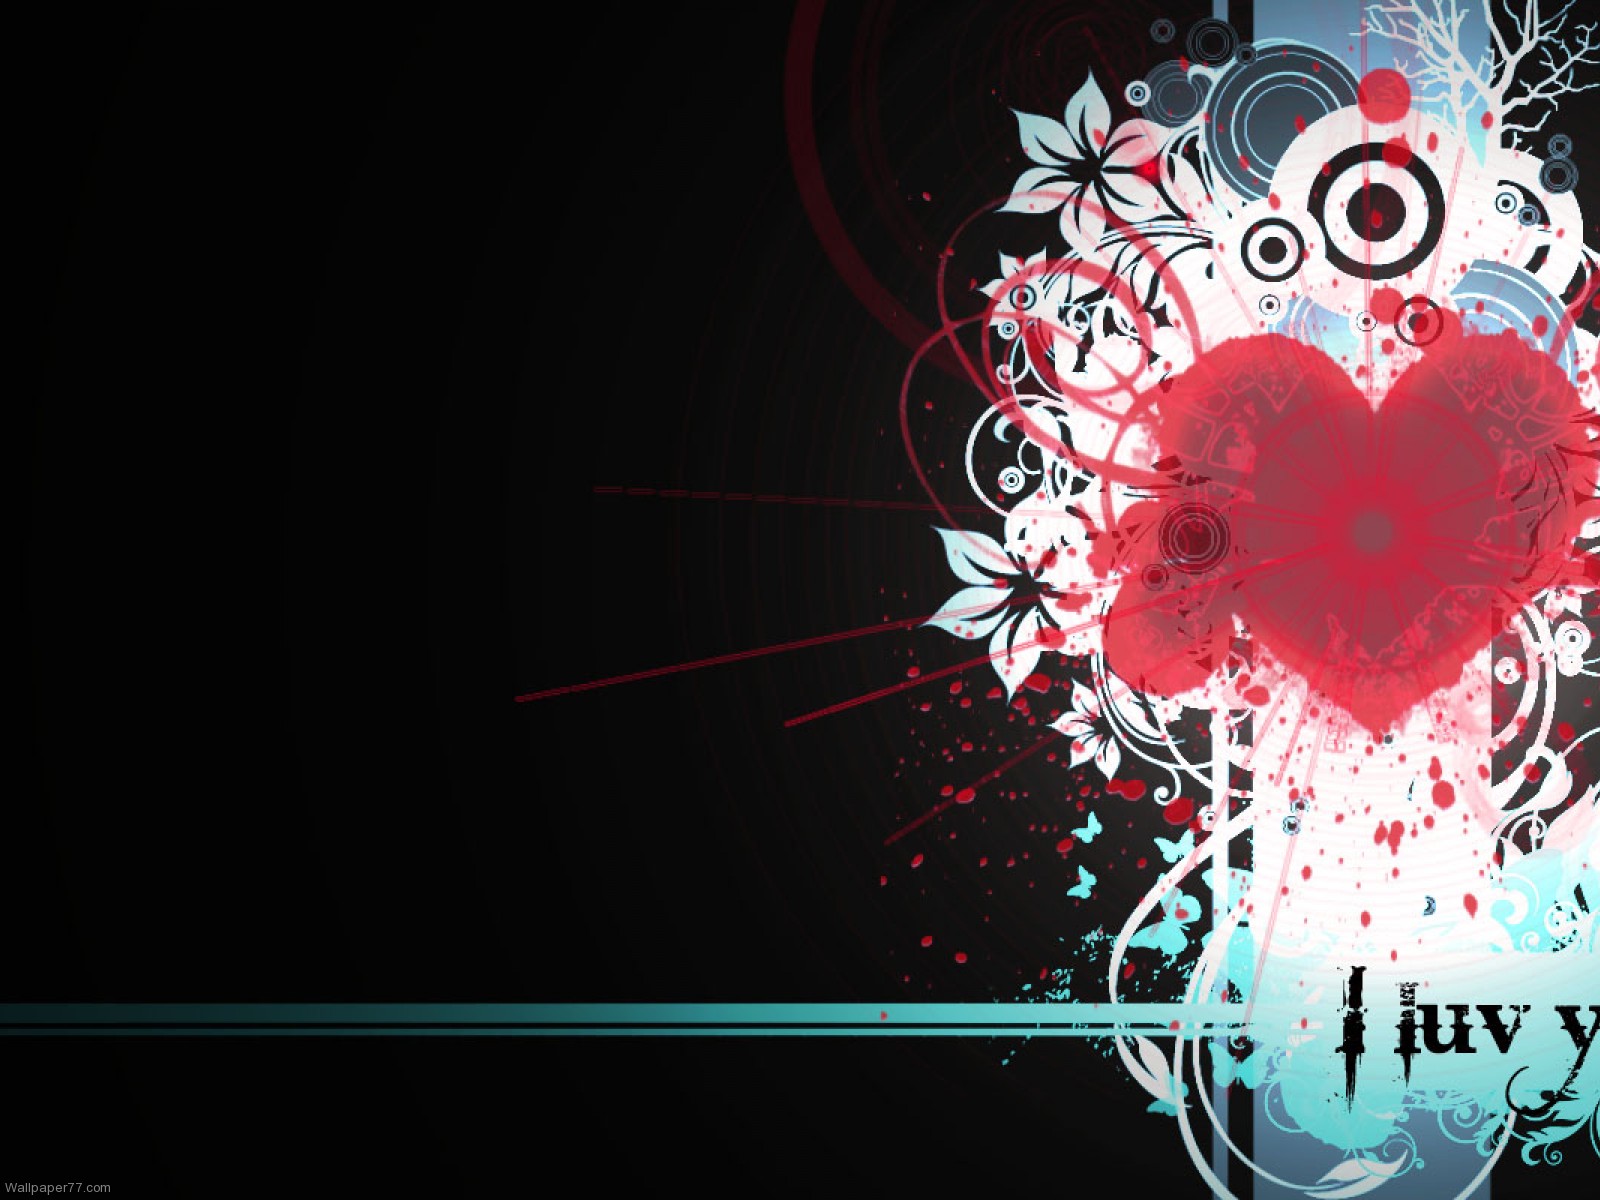 https://blogger.googleusercontent.com/img/b/R29vZ2xl/AVvXsEjX_8qmlgYBfWv4YExmSVTHn-MXUR8wfRDqw84xstSdvZXmn7ouRwRCQyHfLBOAy0clKhQciodODMRCQUmIbmXKvz3sDOgwHwWWBZg7KWSfXc8W8SEhGAlRgkolSXZcSXJLB3mn45jSY-A/s1600/Love+Your+Heart+Love+Wallpaper.jpg